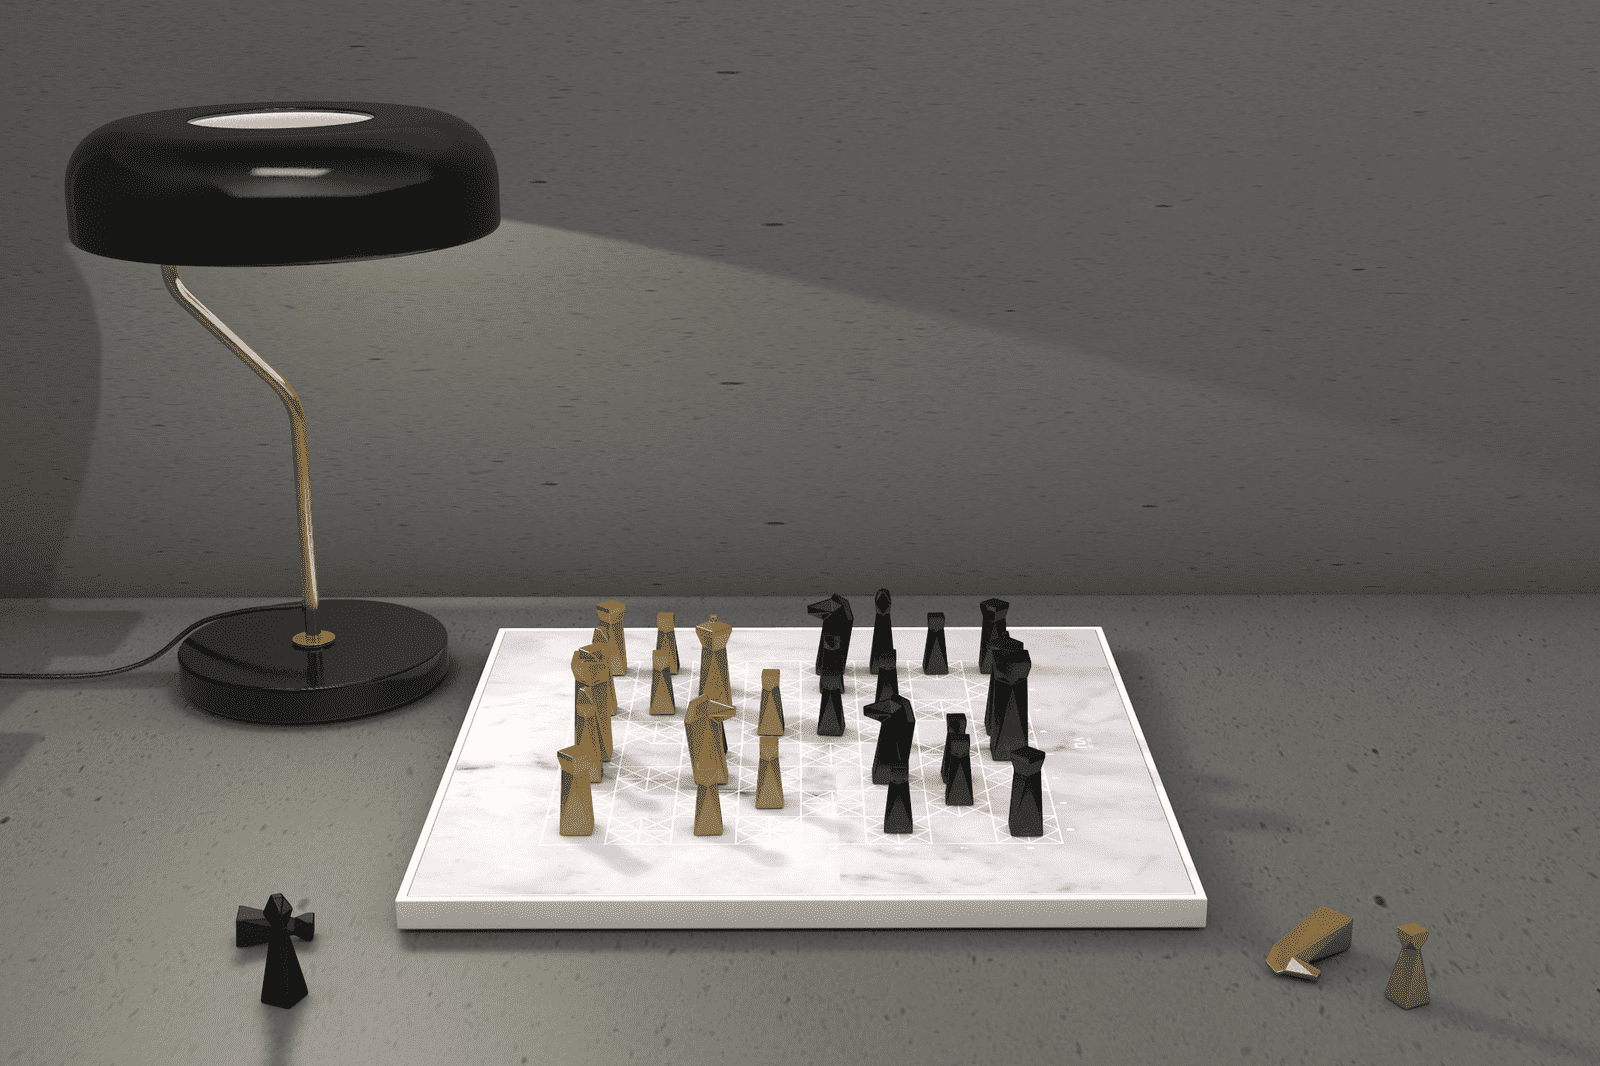 Gray Marble Chess Set, Handmade Modern Geometric Chess Set with Resin Chess Pieces, Custom Gift